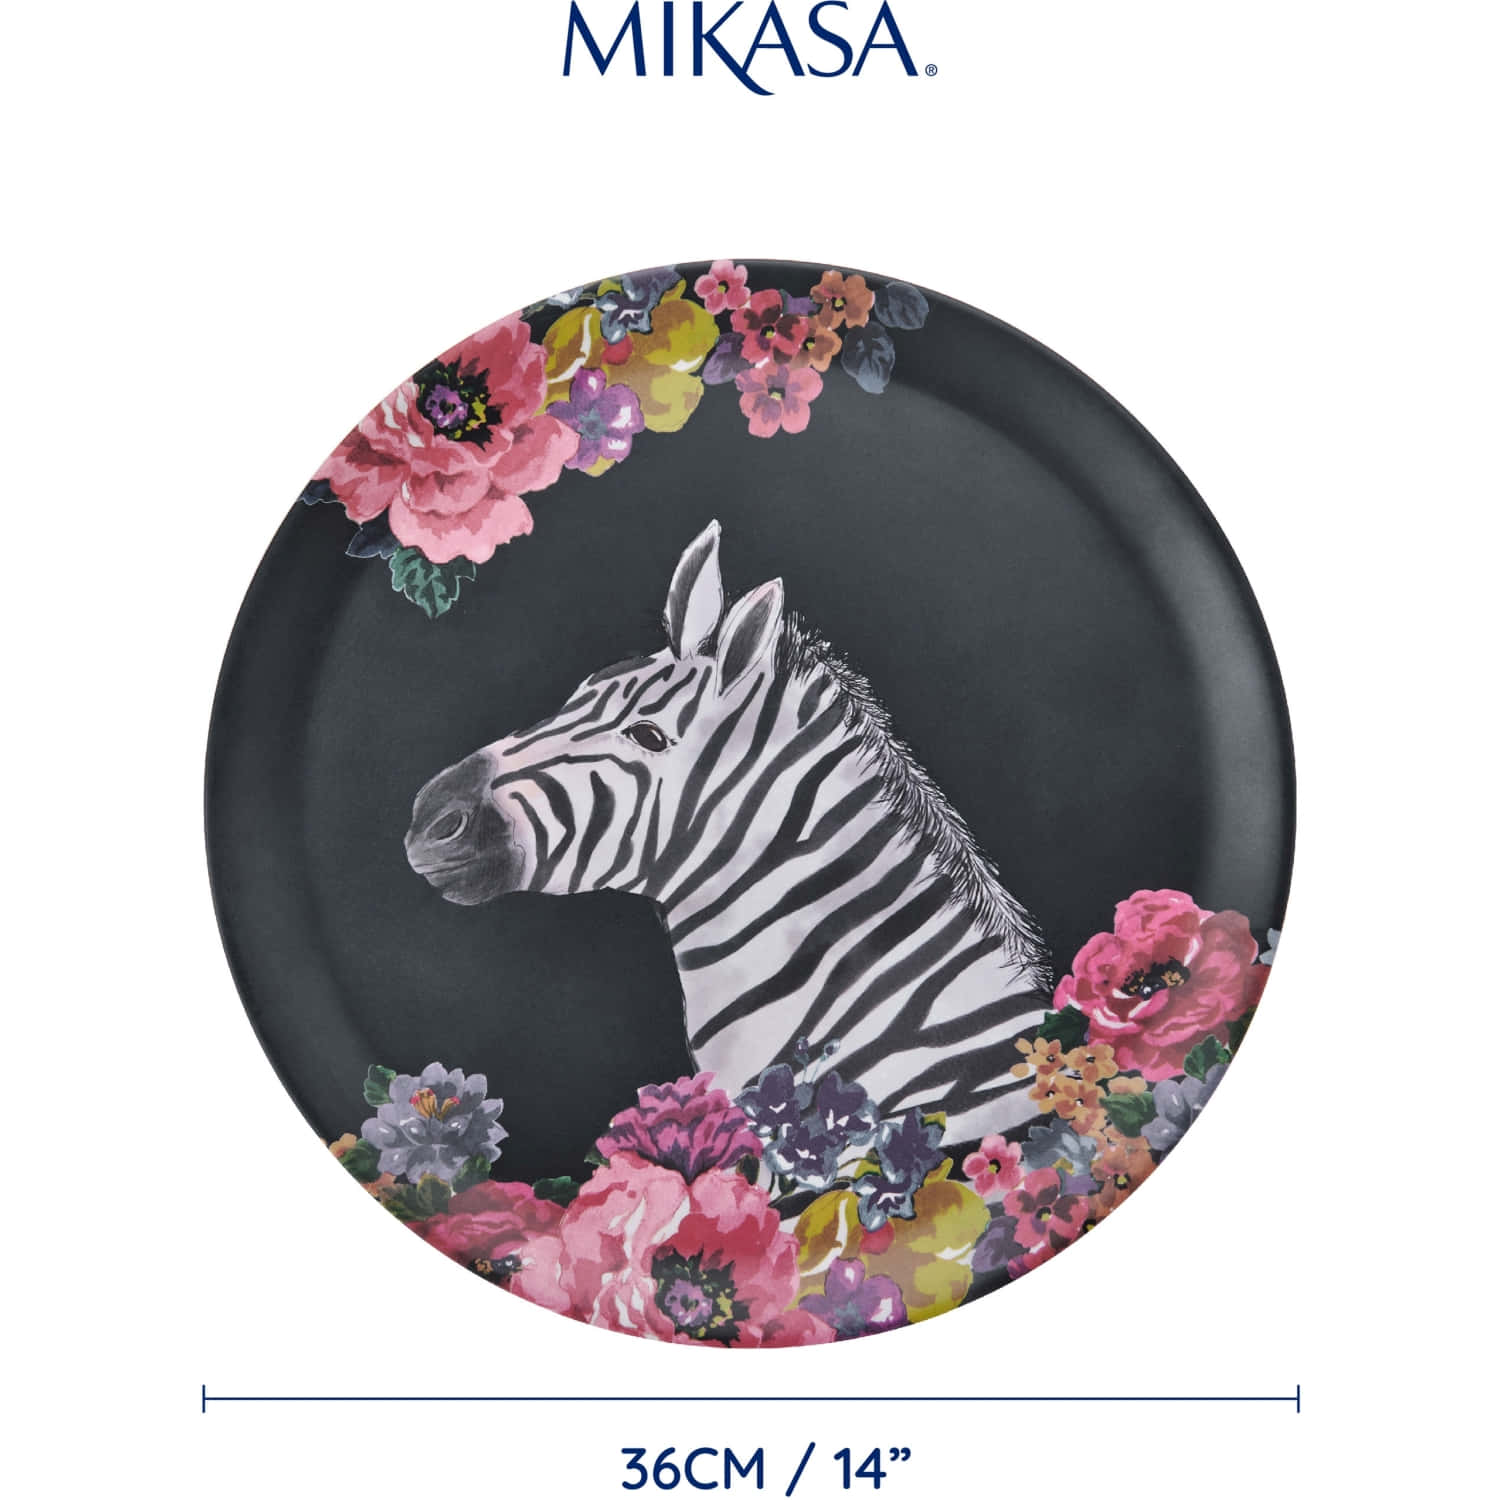 Kandik melamiin 36cm 'wild at heart zebra' Mikasa